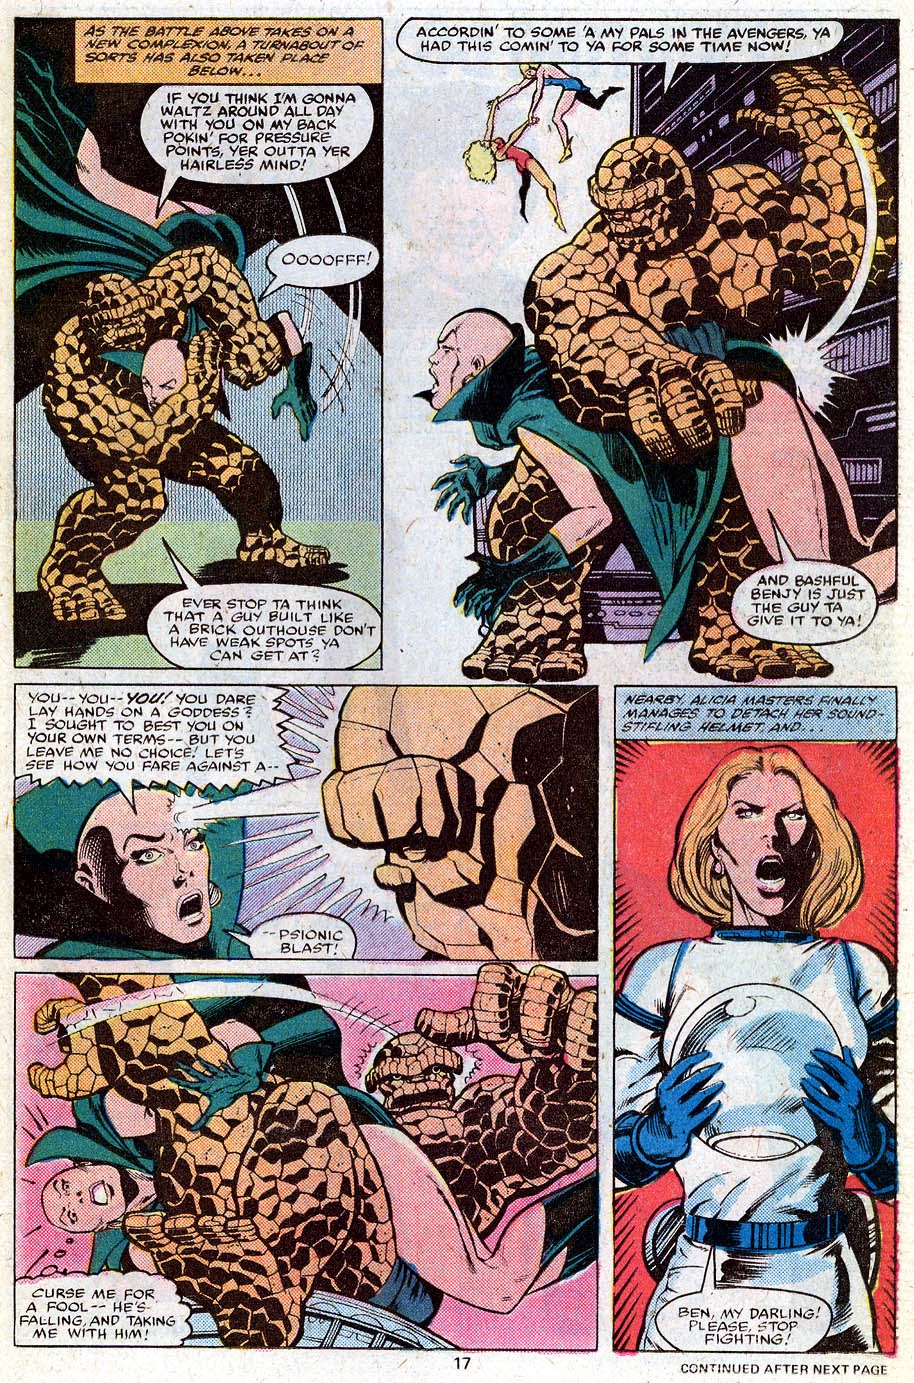 Vicious comics presents avengers deleted